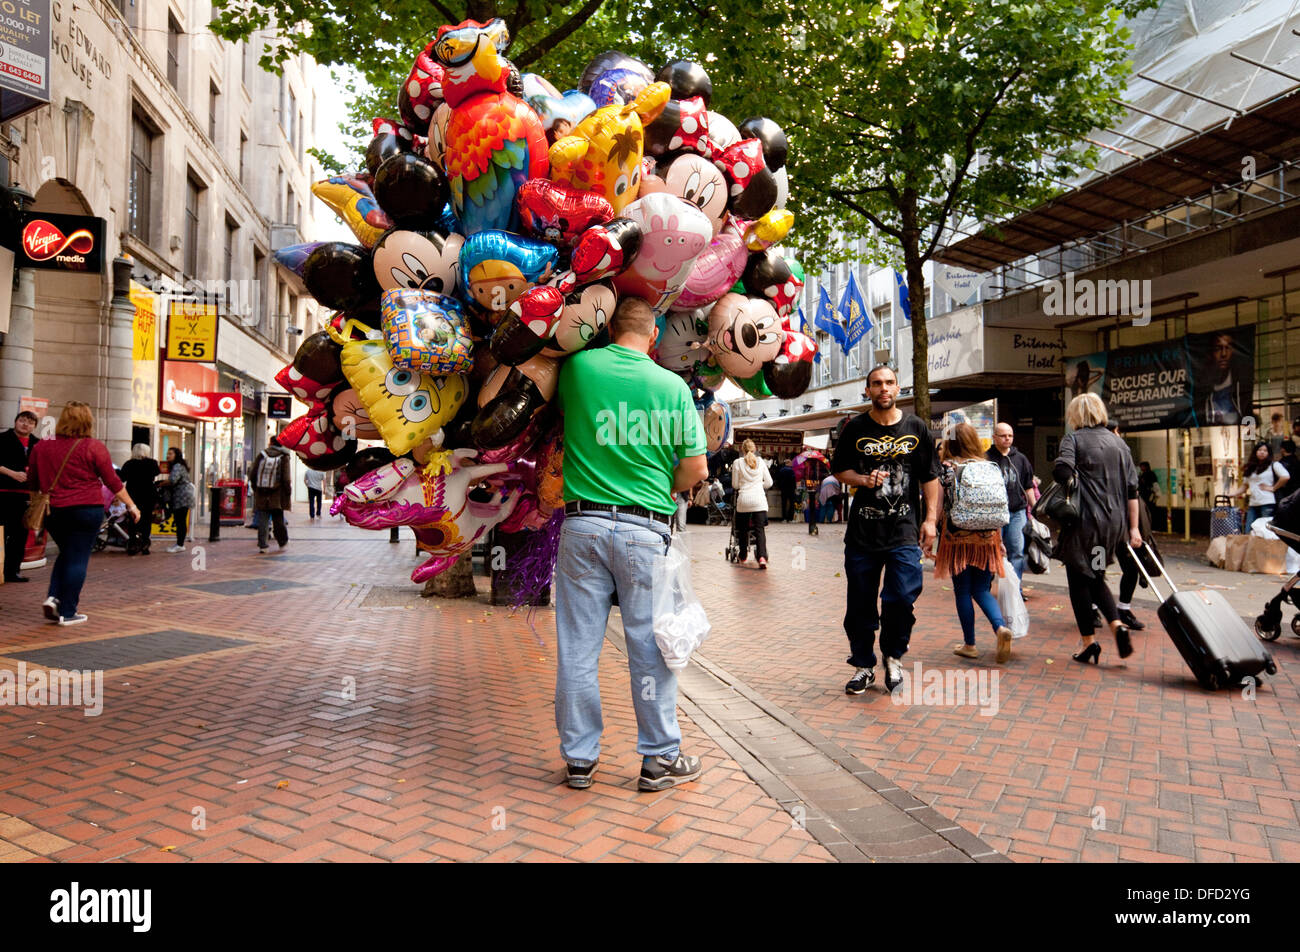 Balloon seller, New Street pedestrianised High street, Birmingham, England UK Stock Photo